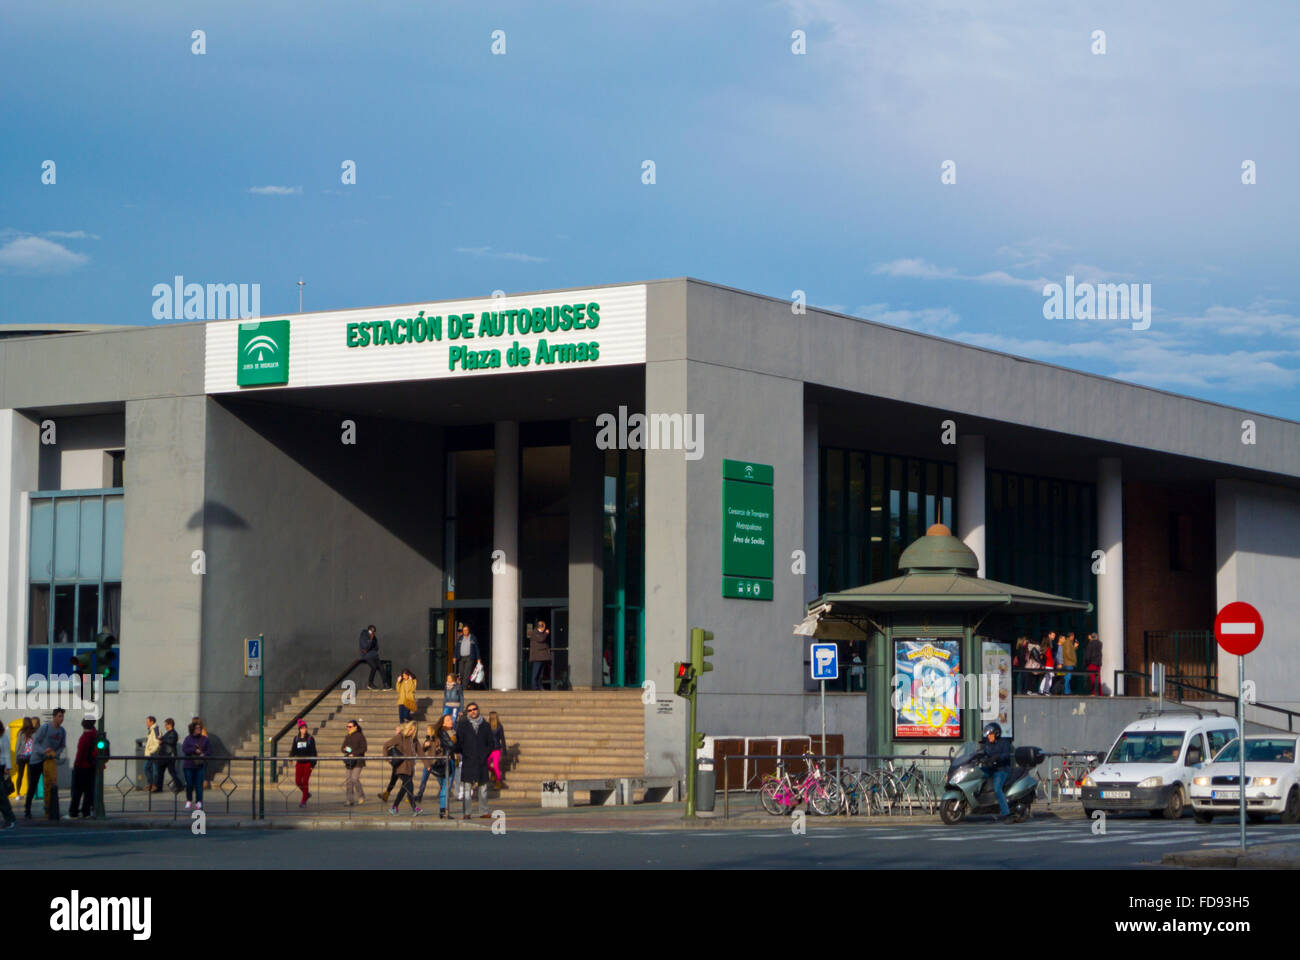 Estacion de Autobuses, Bus station, Plaza de Armas, Sevilla, Andalucia, Spain Stock Photo